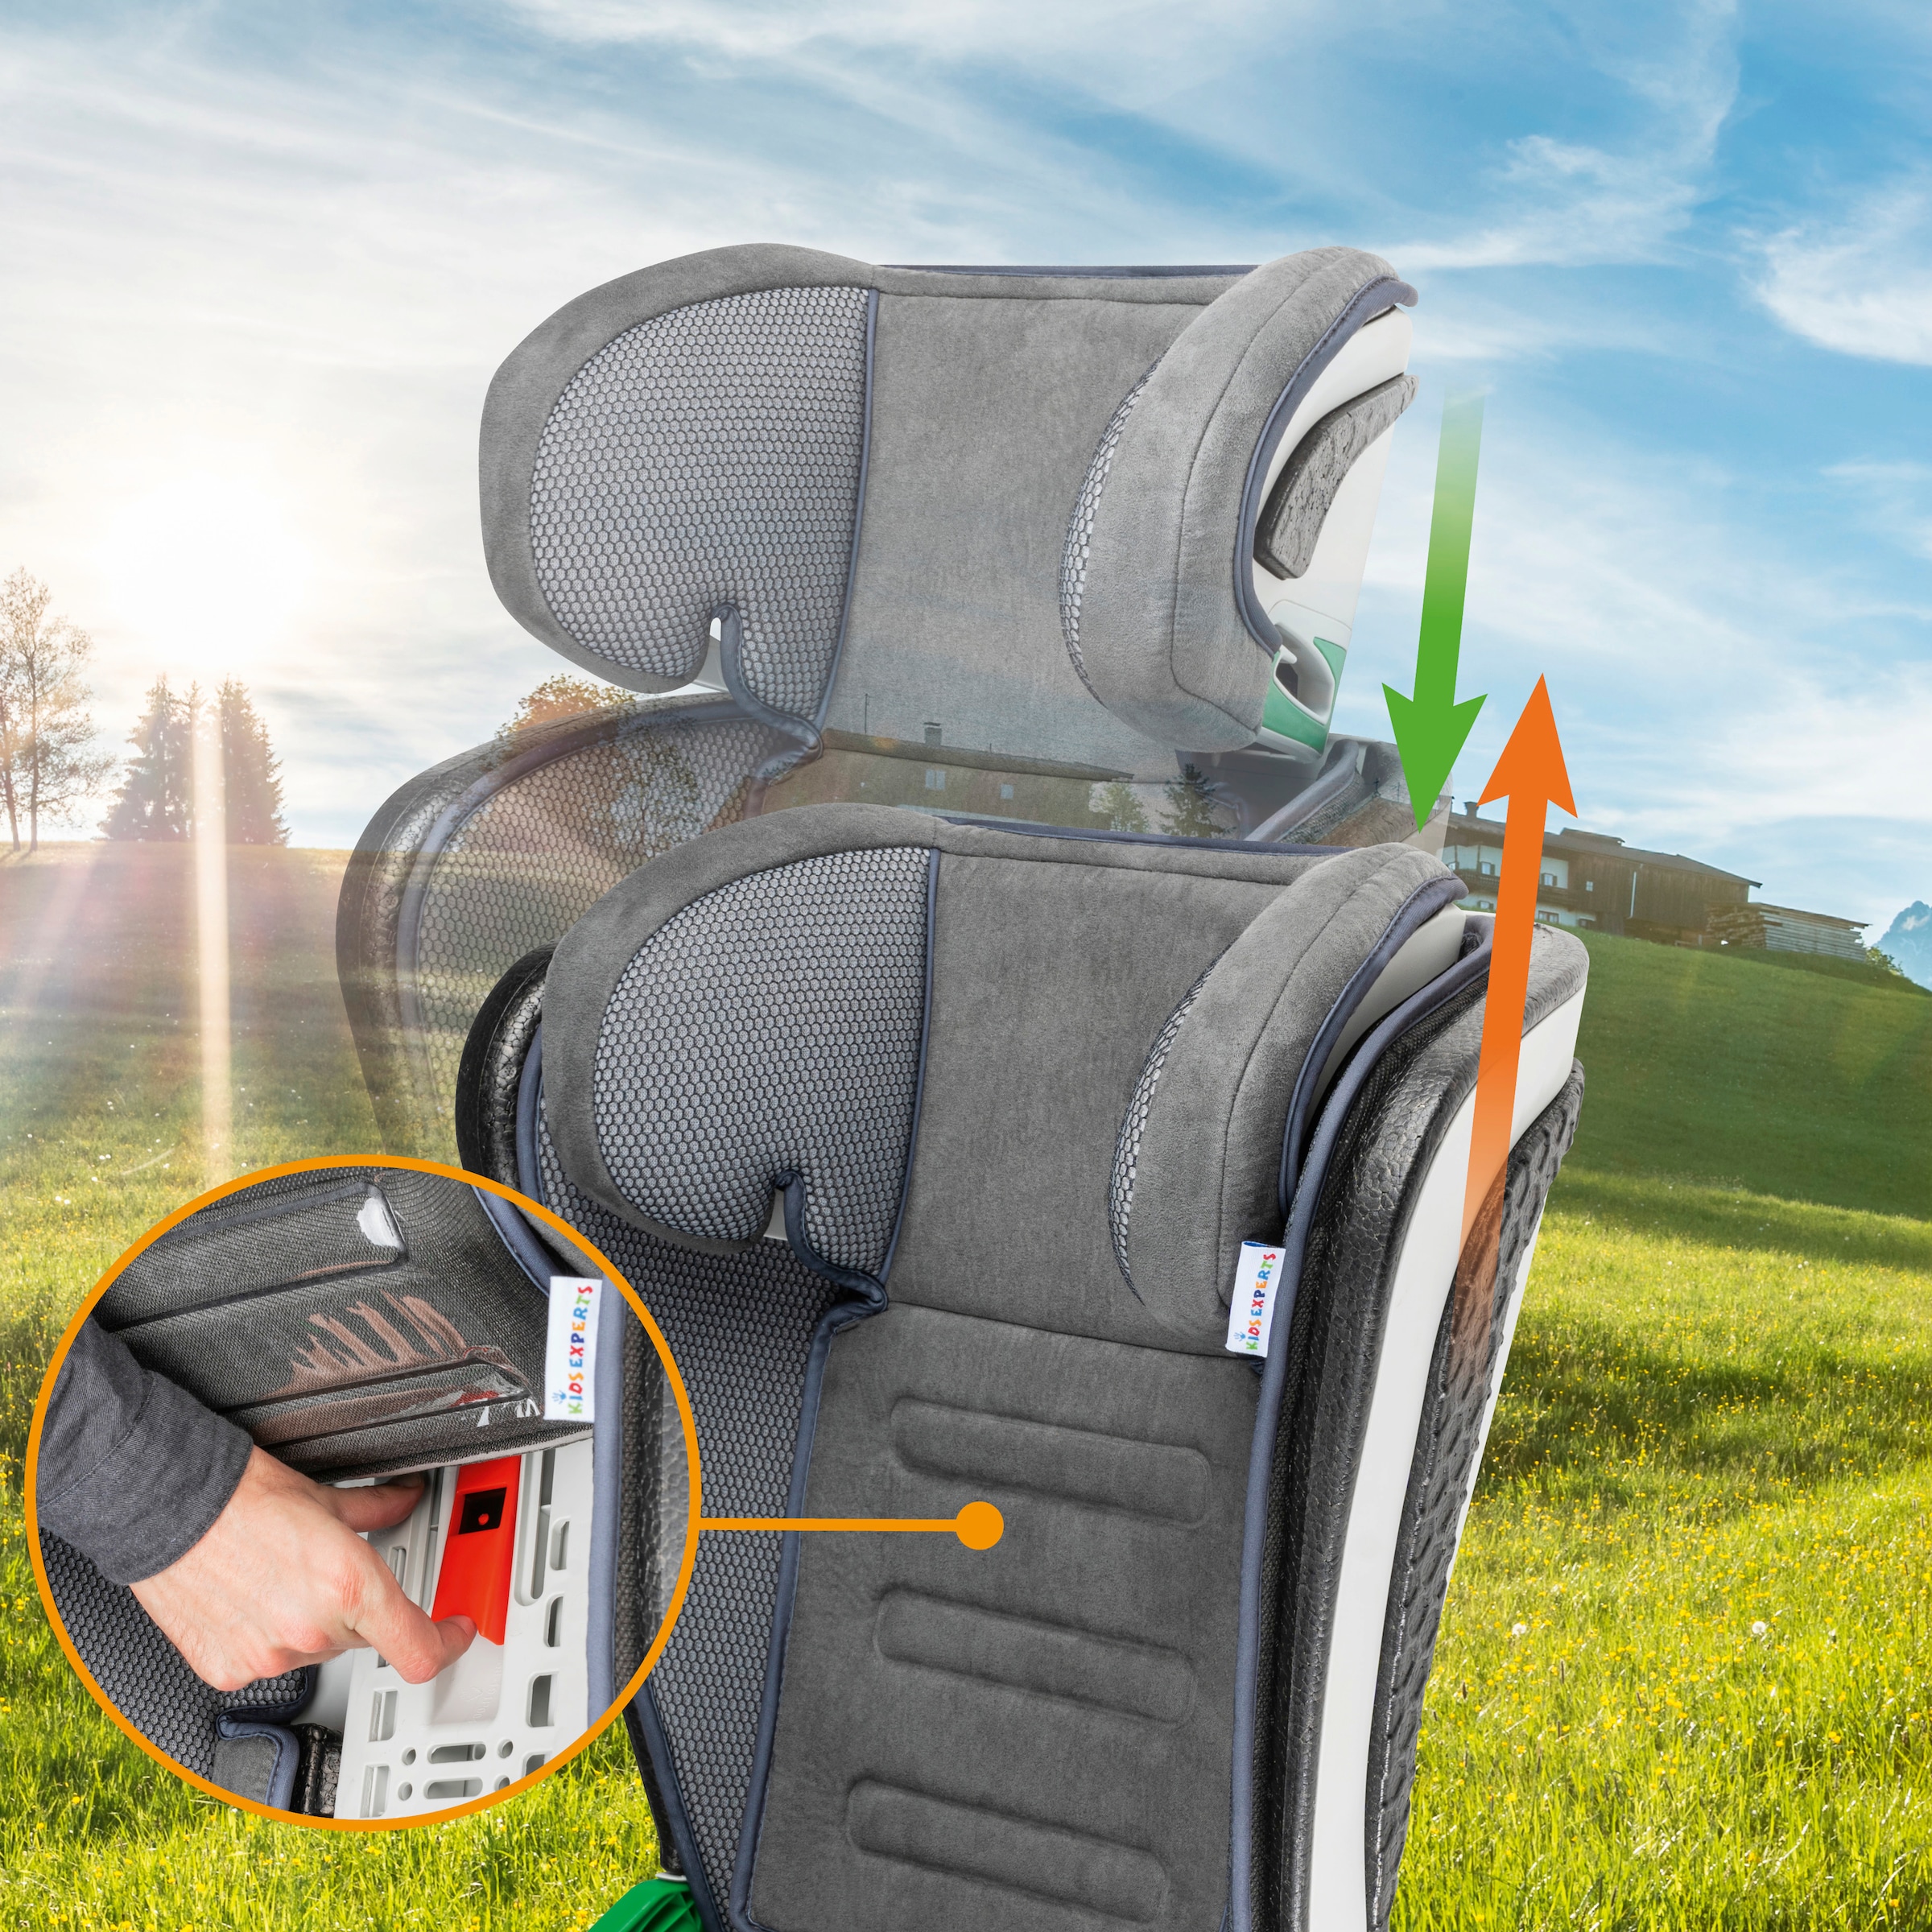 Kindersitz Noemi, klappbarer Auto-Kindersitz ECE R129 geprüft